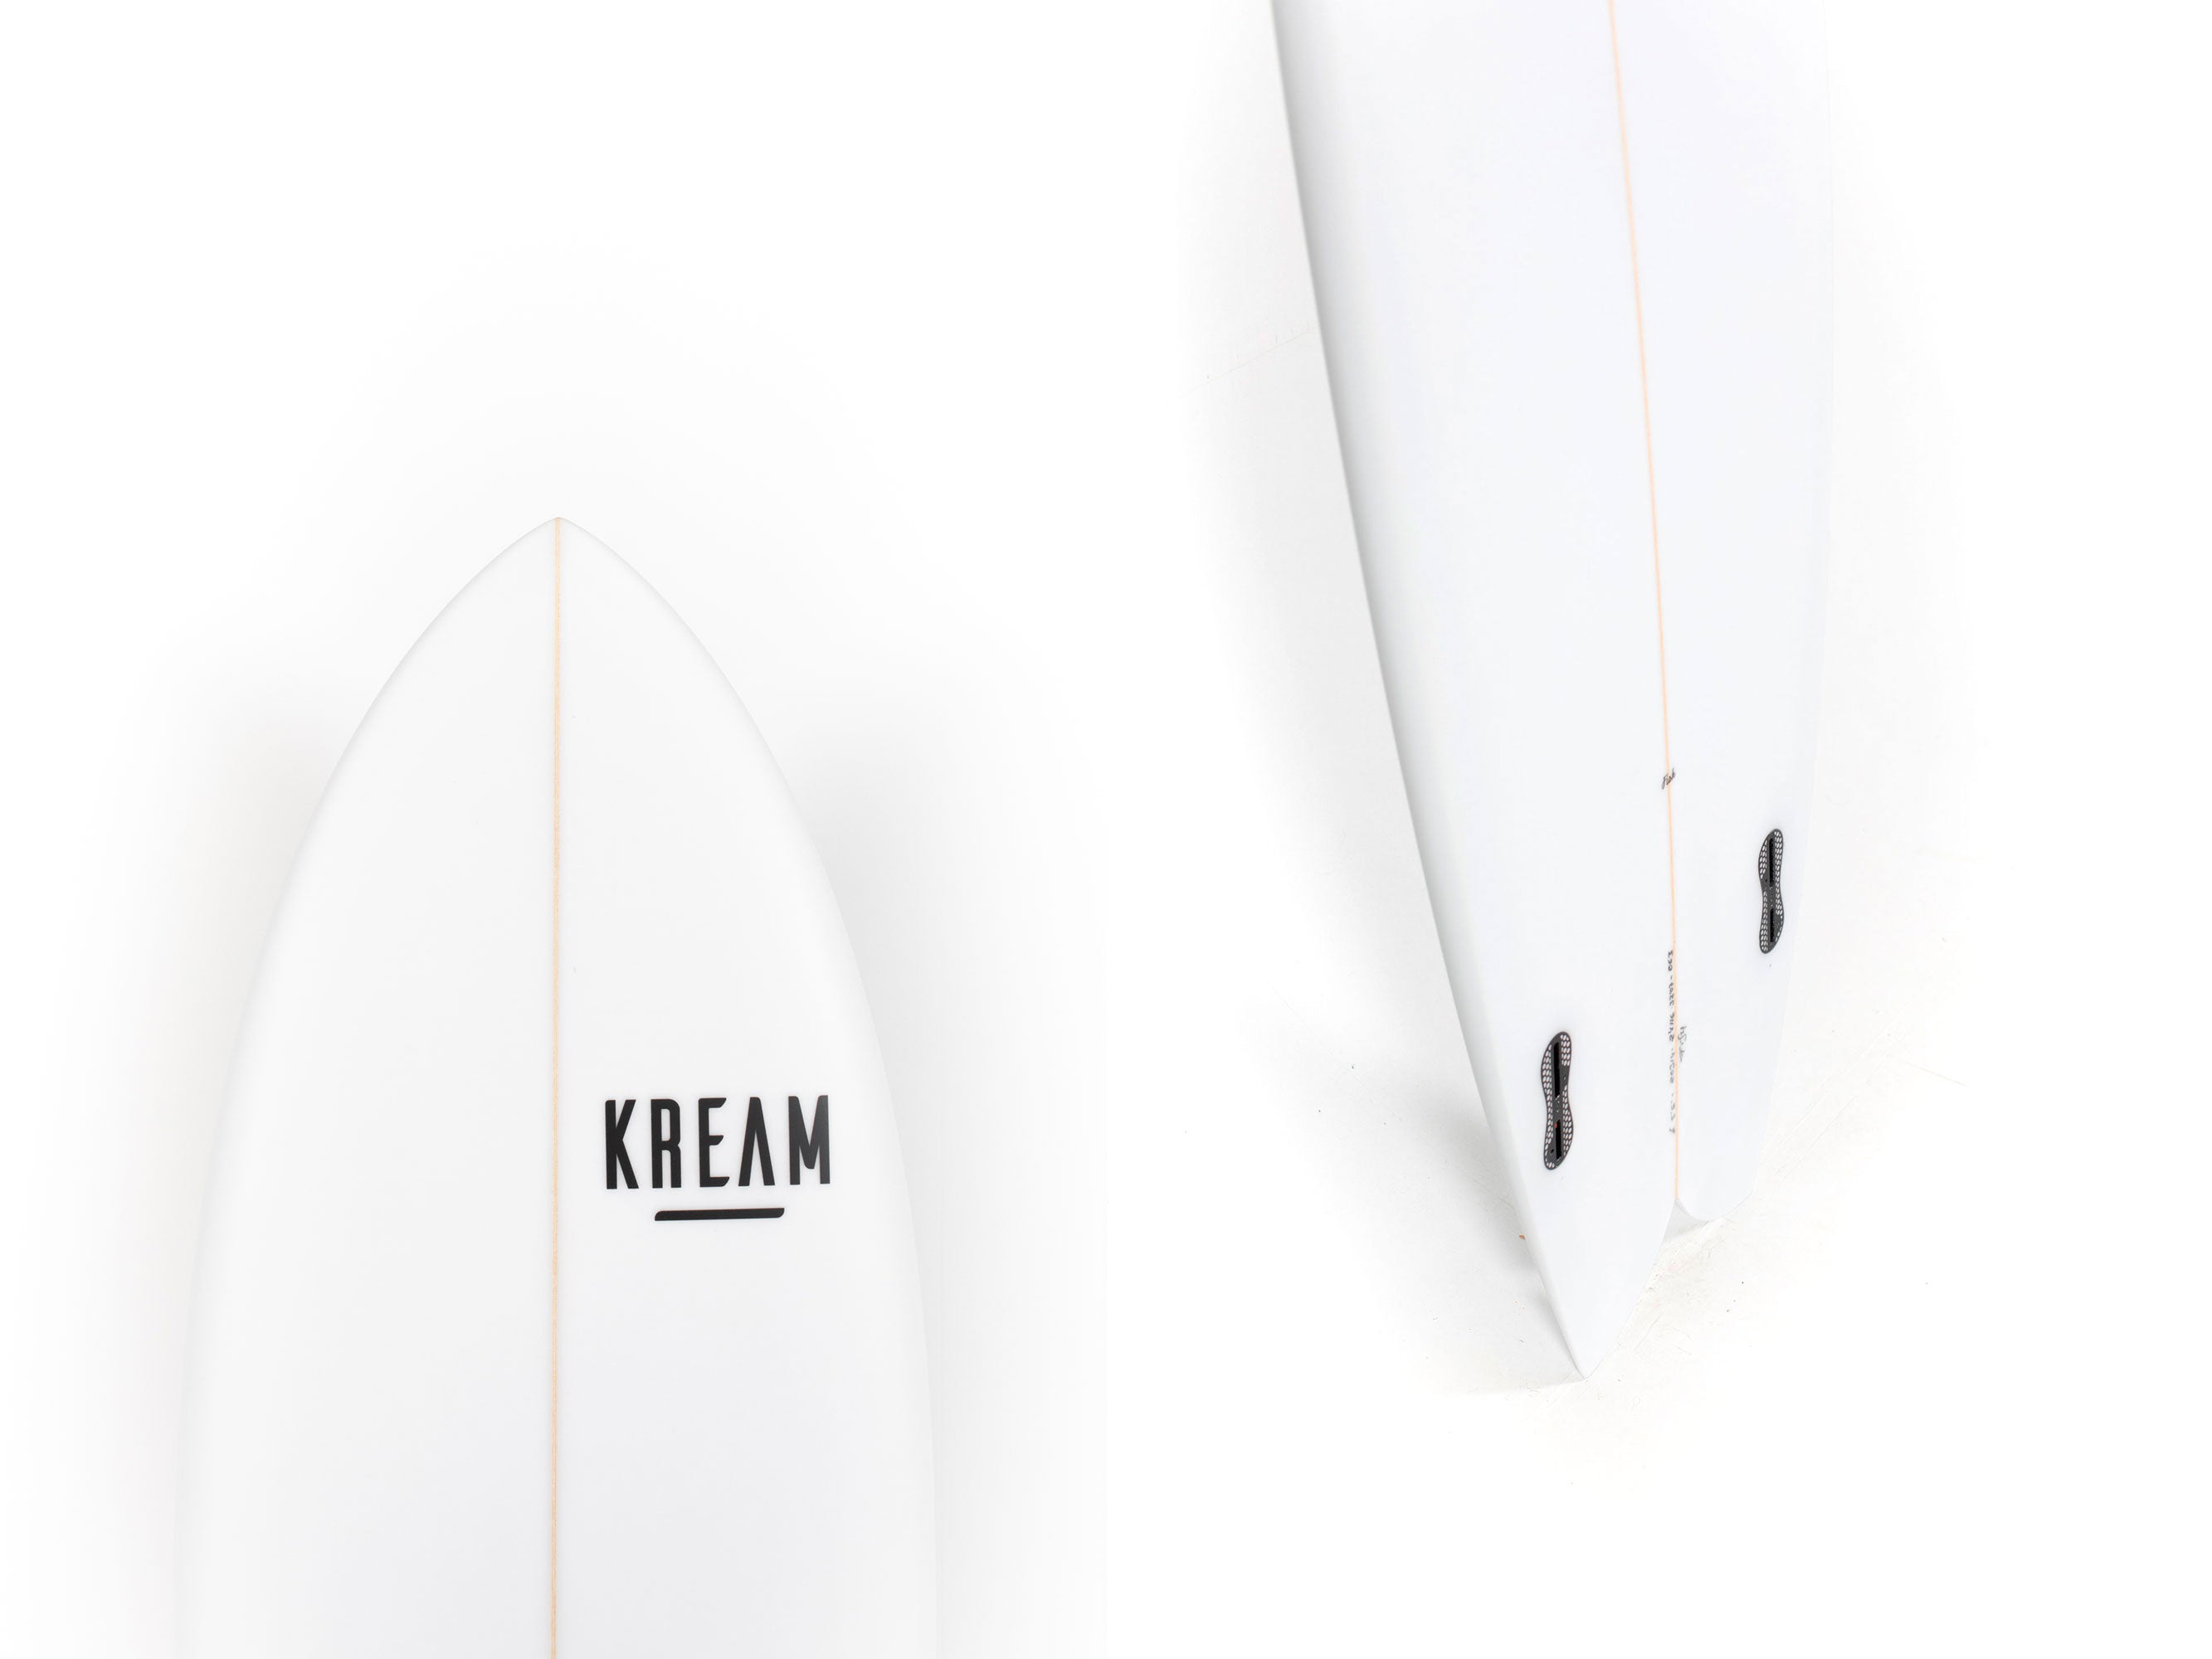 Pukas Surf Shop - Kream Surfboards